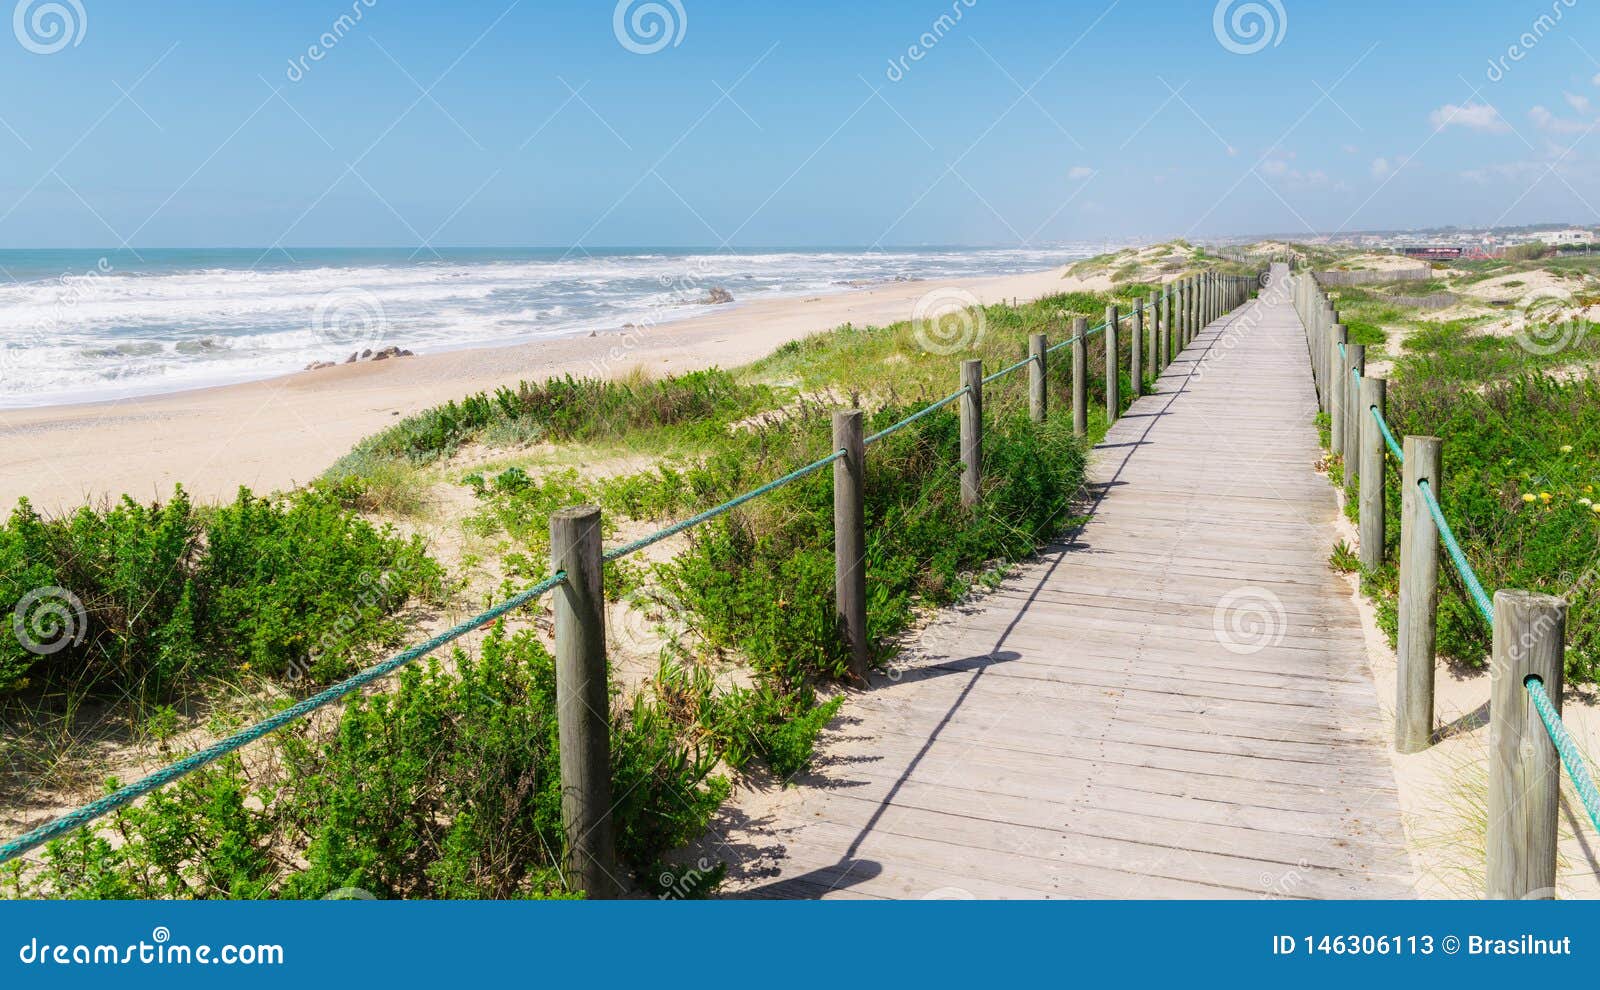 wooden boardwalk at the praia da frente azul, in english the blue beach front in the seaside resort espinho